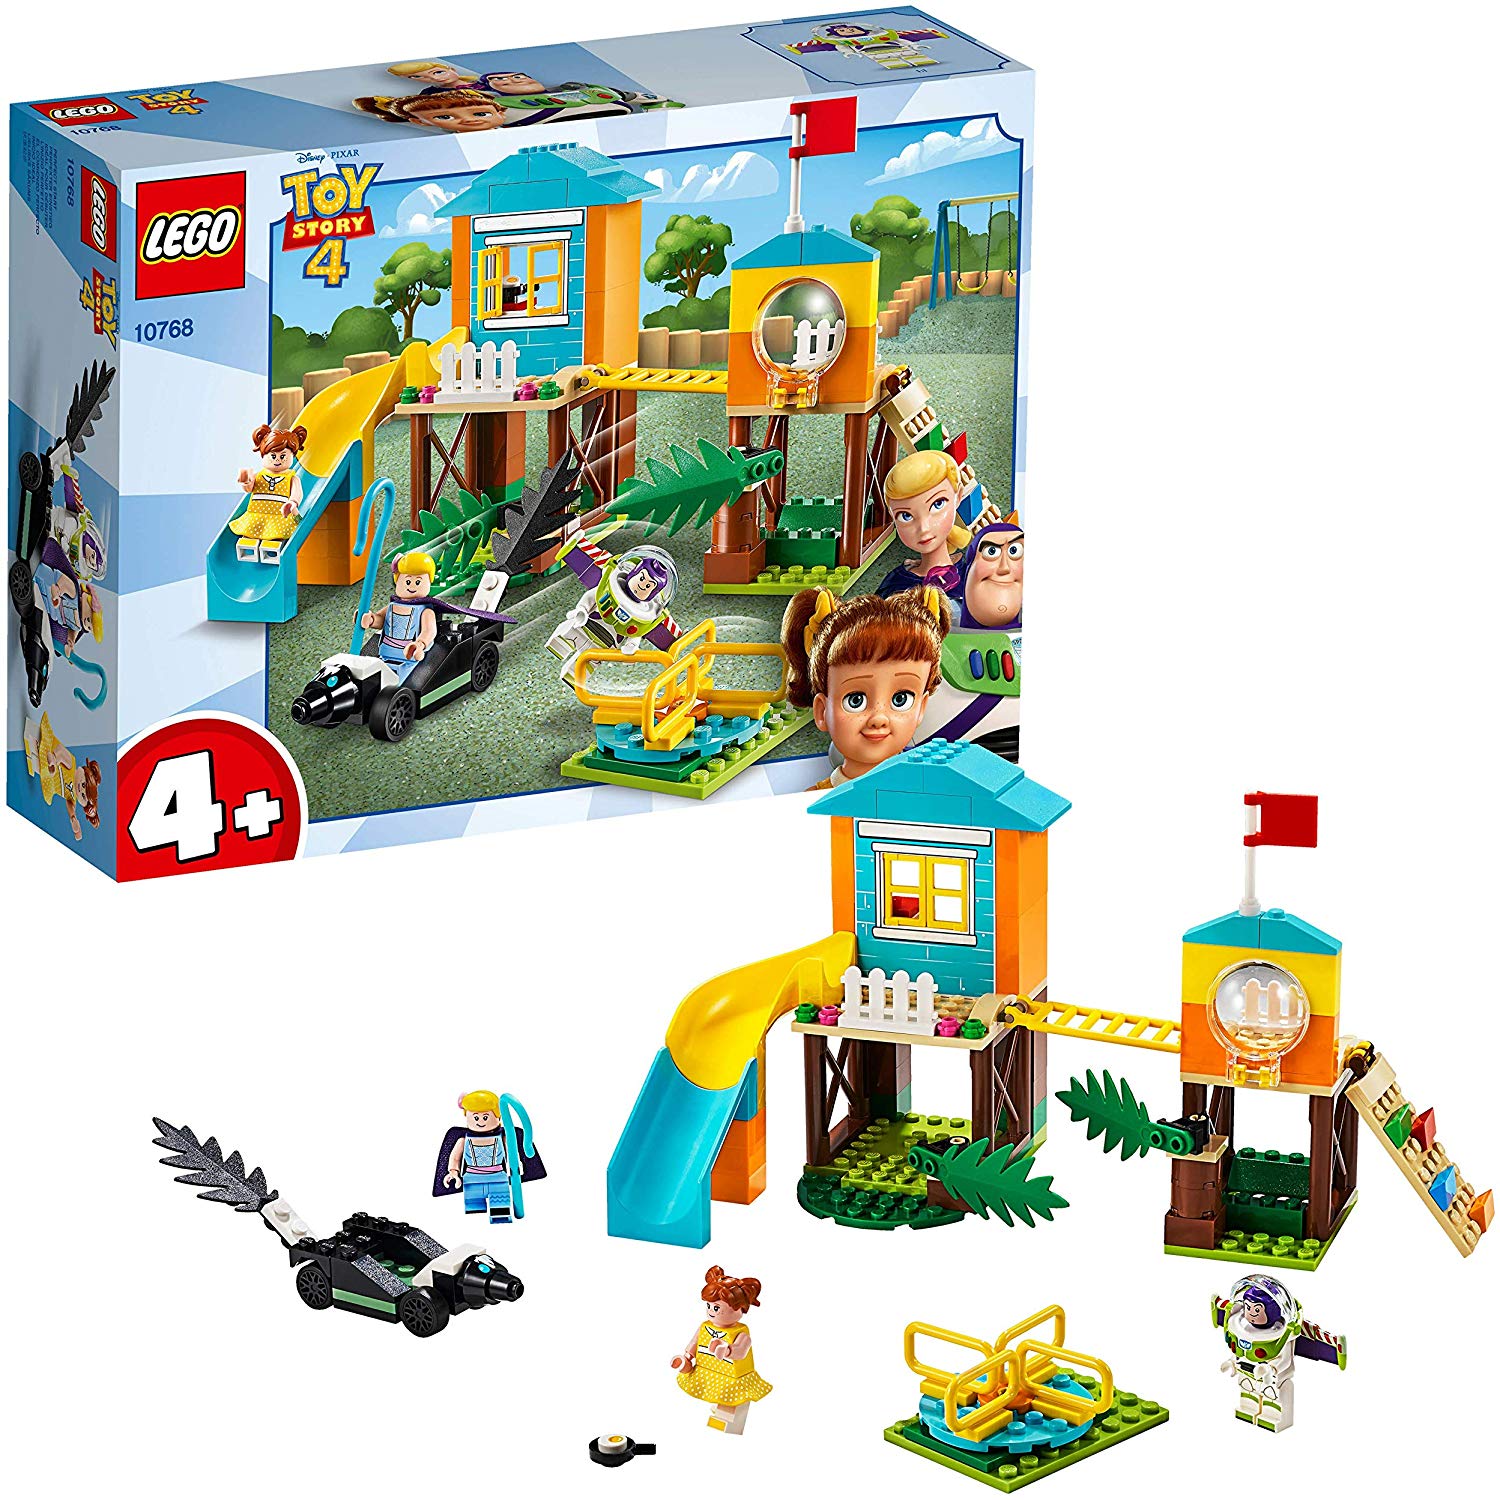 LEGO Disney Pixar’s Toy Story Lego Juniors 10768 Missing Product Title, Multi-Colour